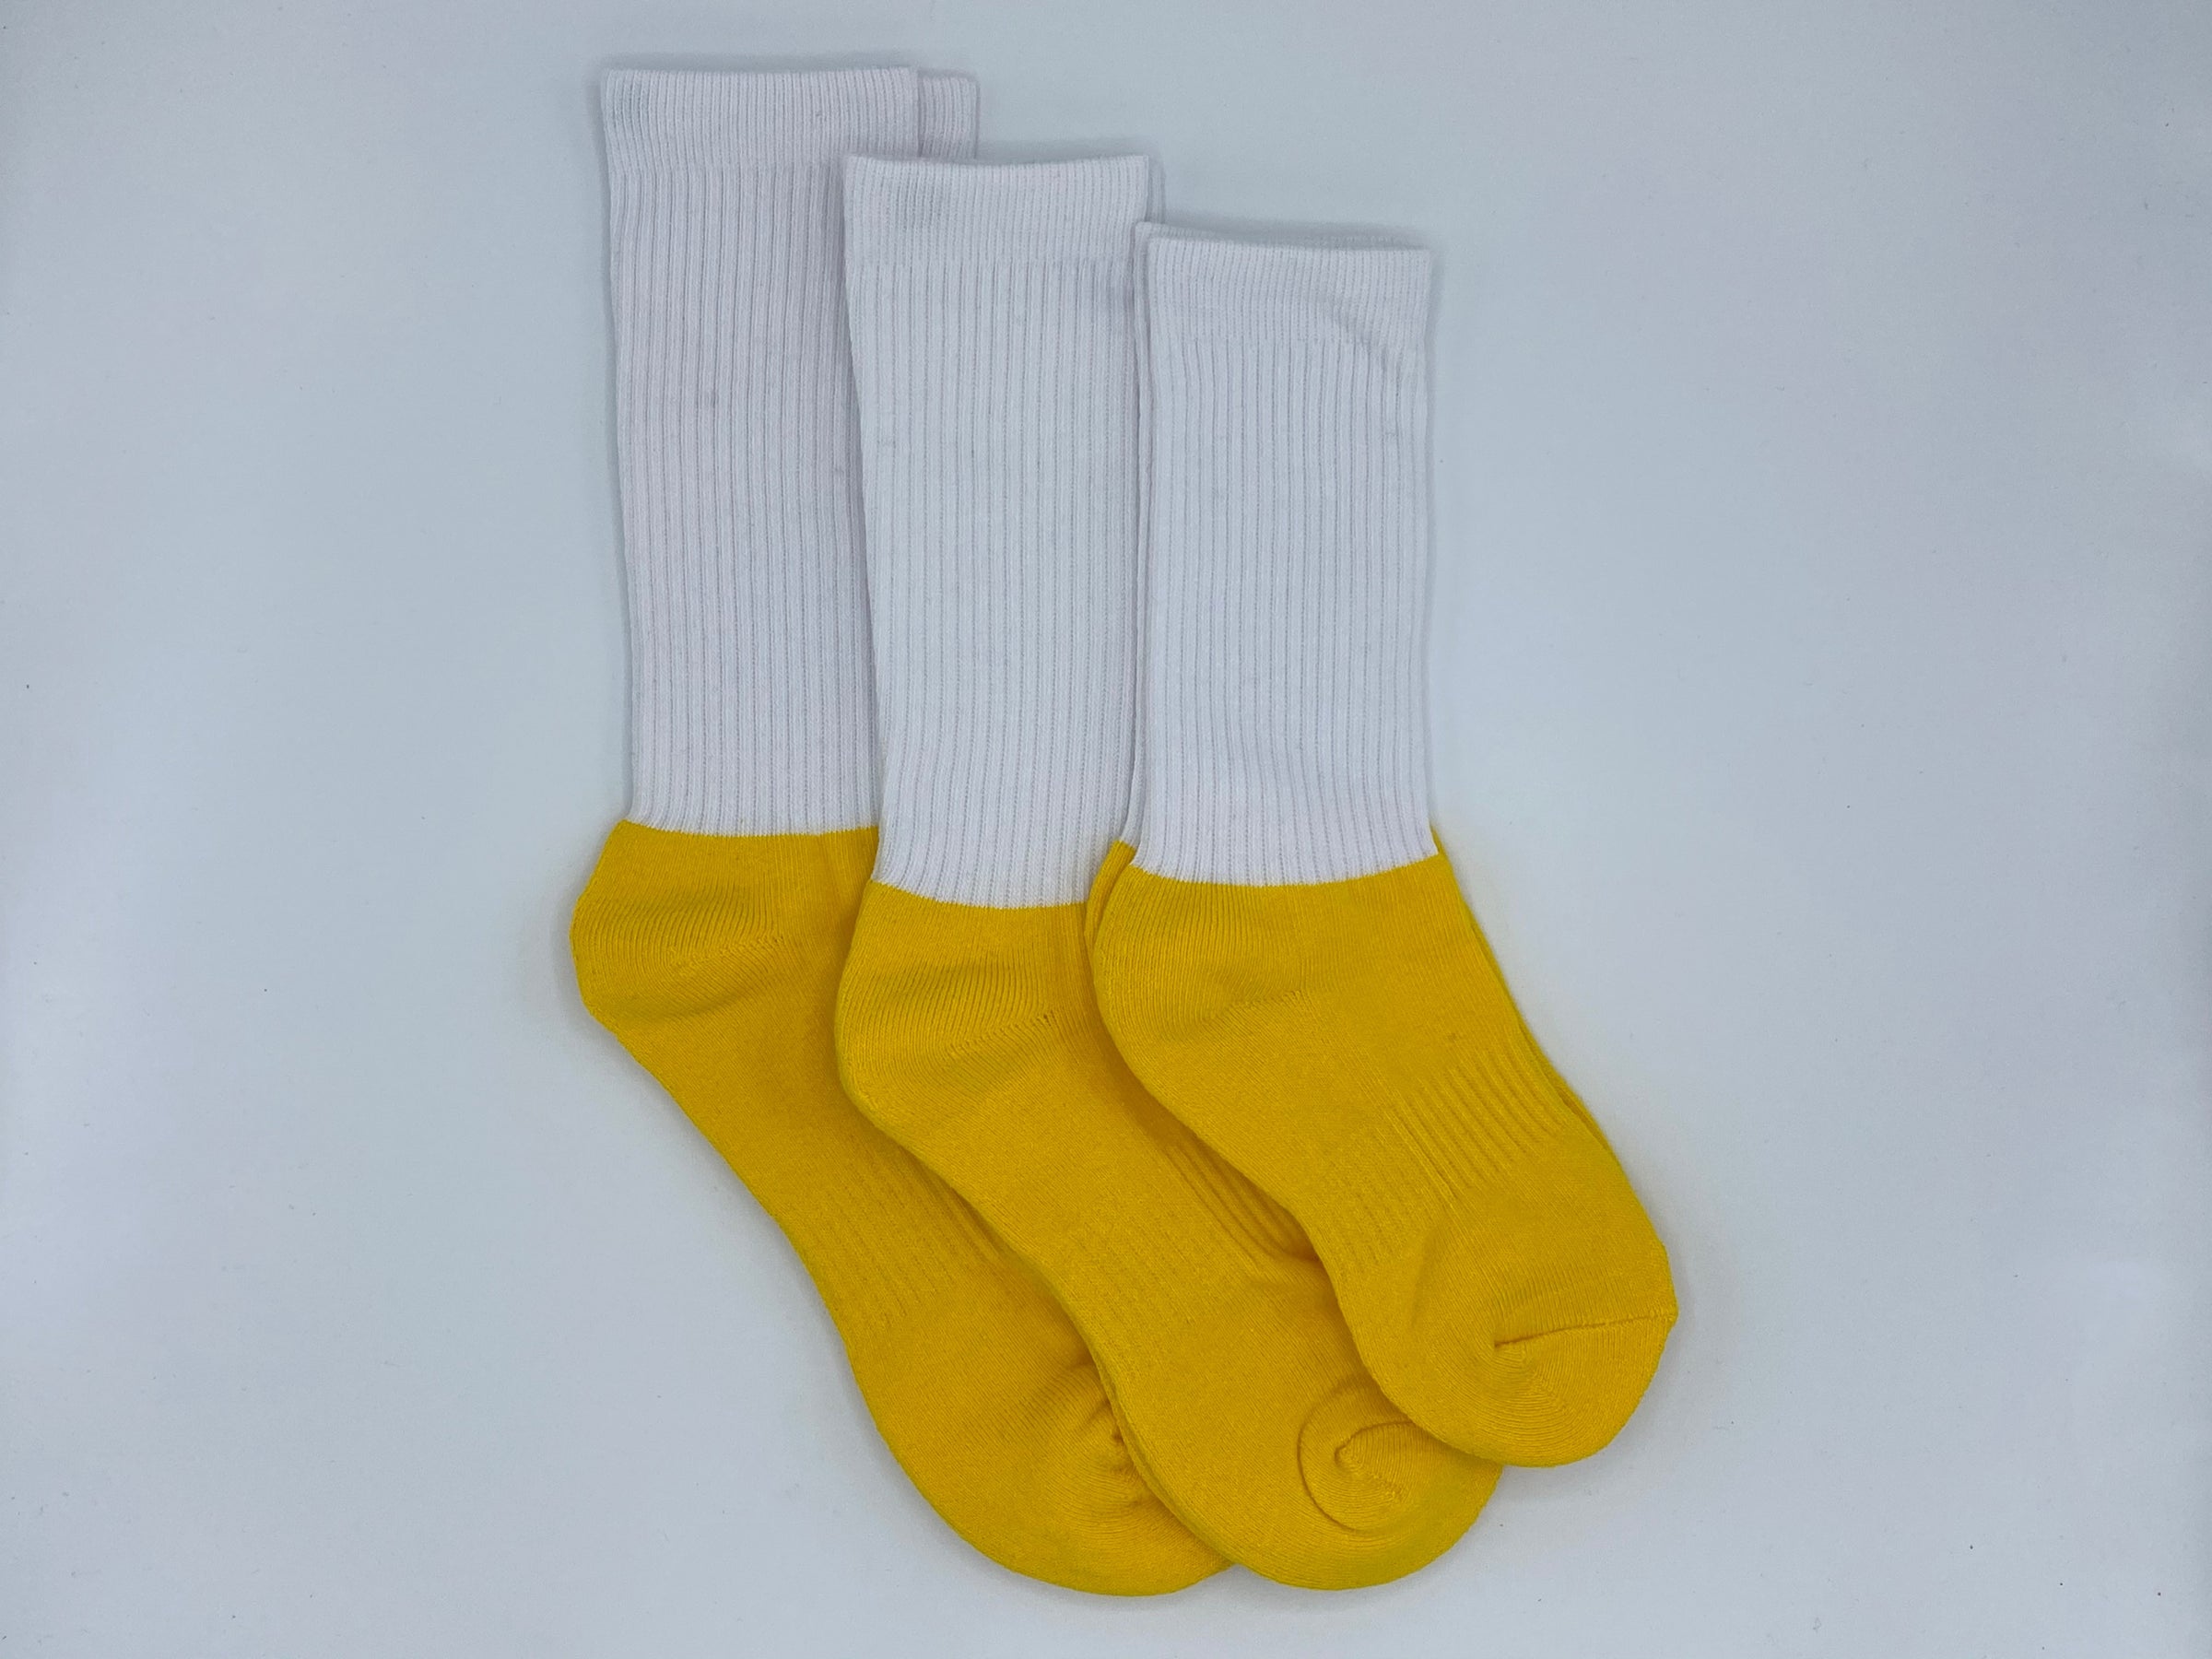 Socks Stripes Sublimation Socks